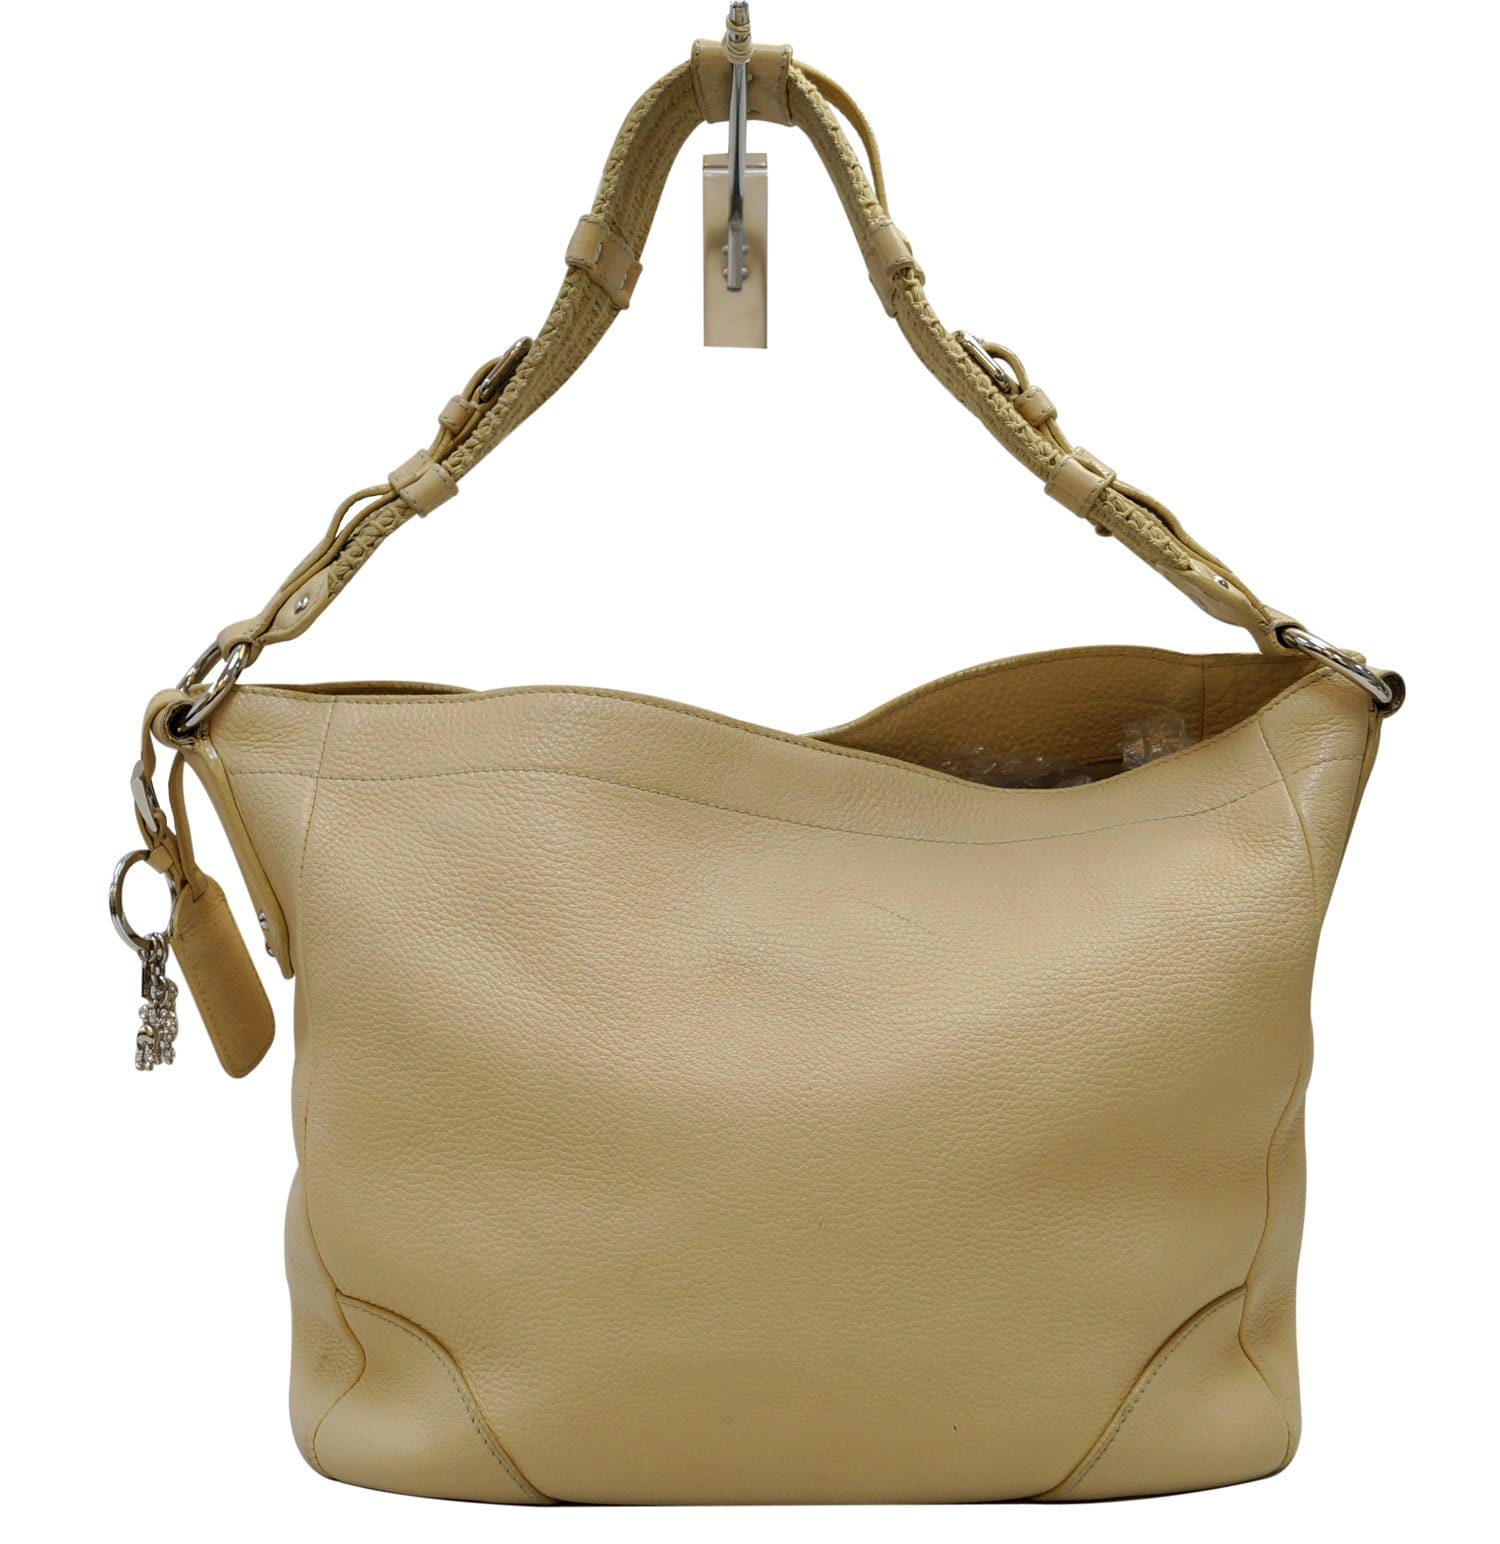 Prada Hobo Bag - Daino Shoulder Bag Cream Leather